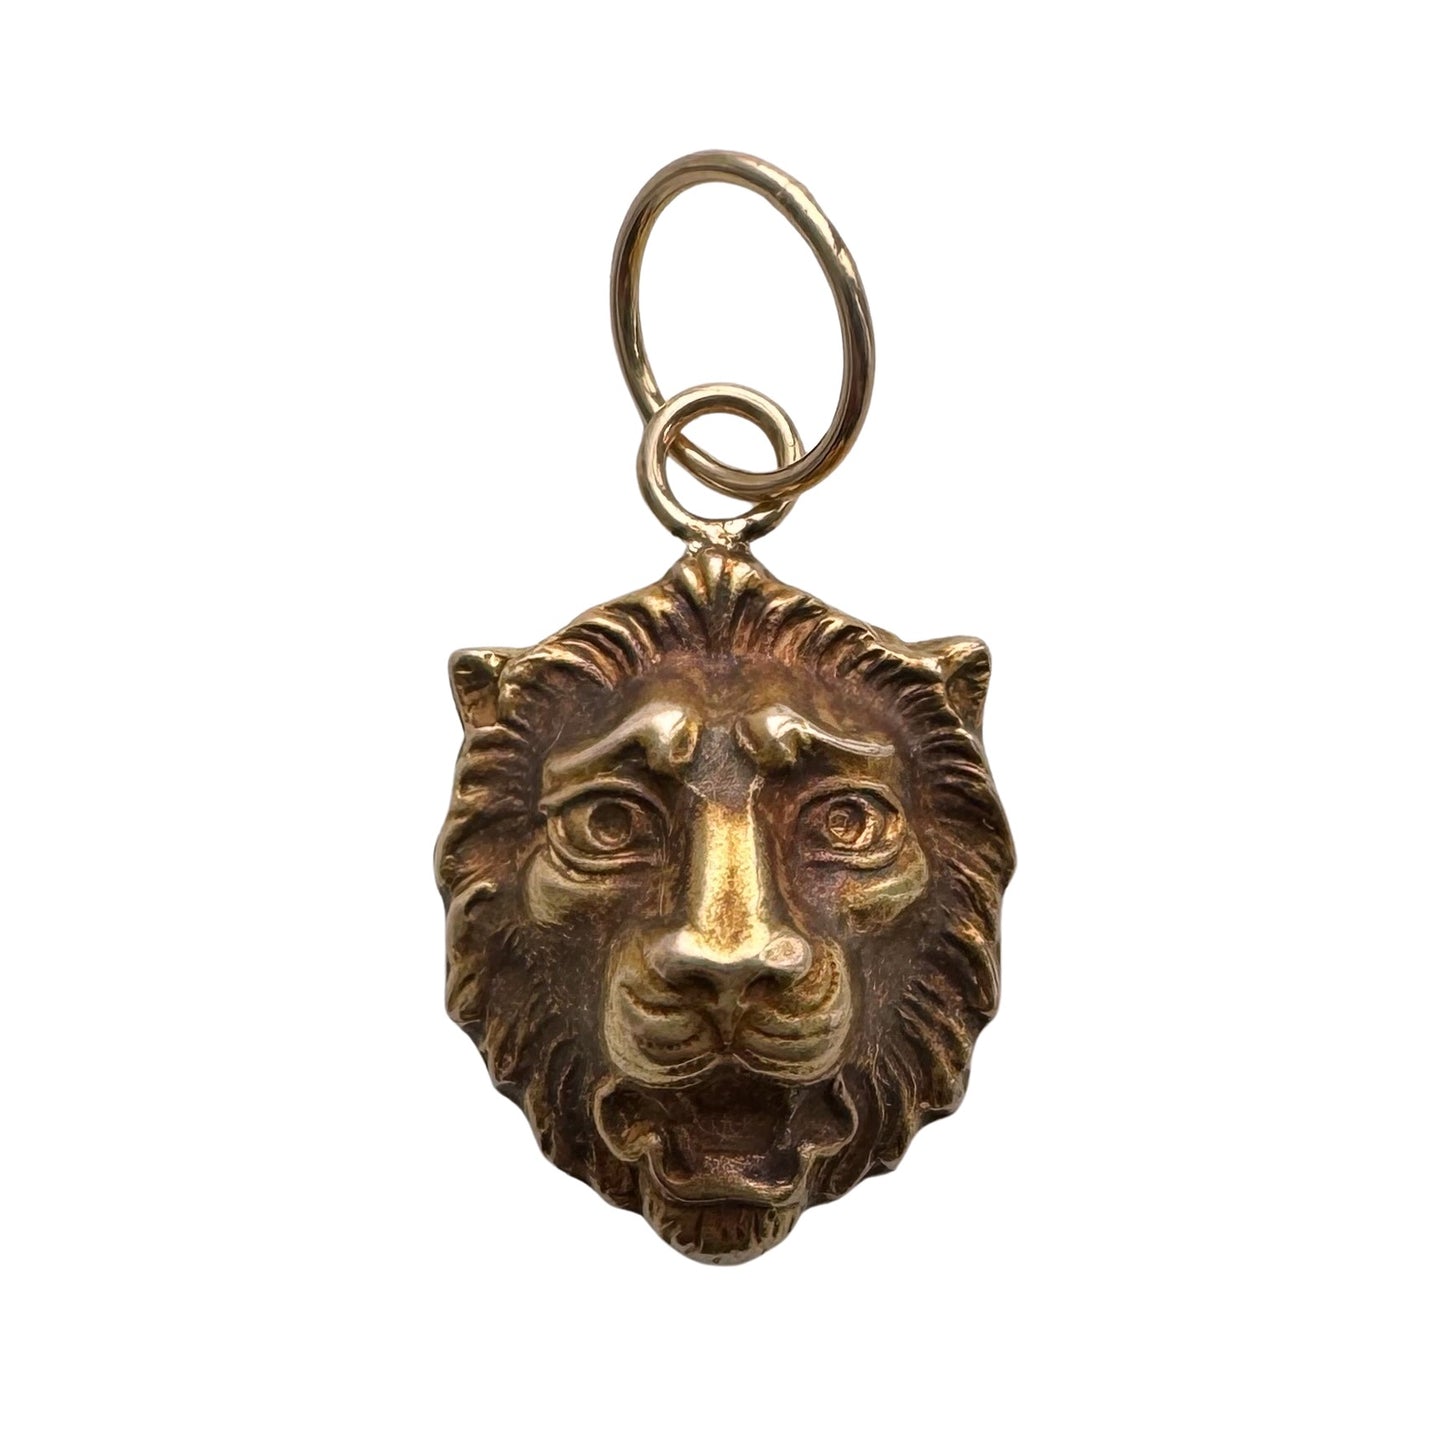 reimagined A N T I Q U E // deco roar / 14k yellow gold lion face / a conversion pendant